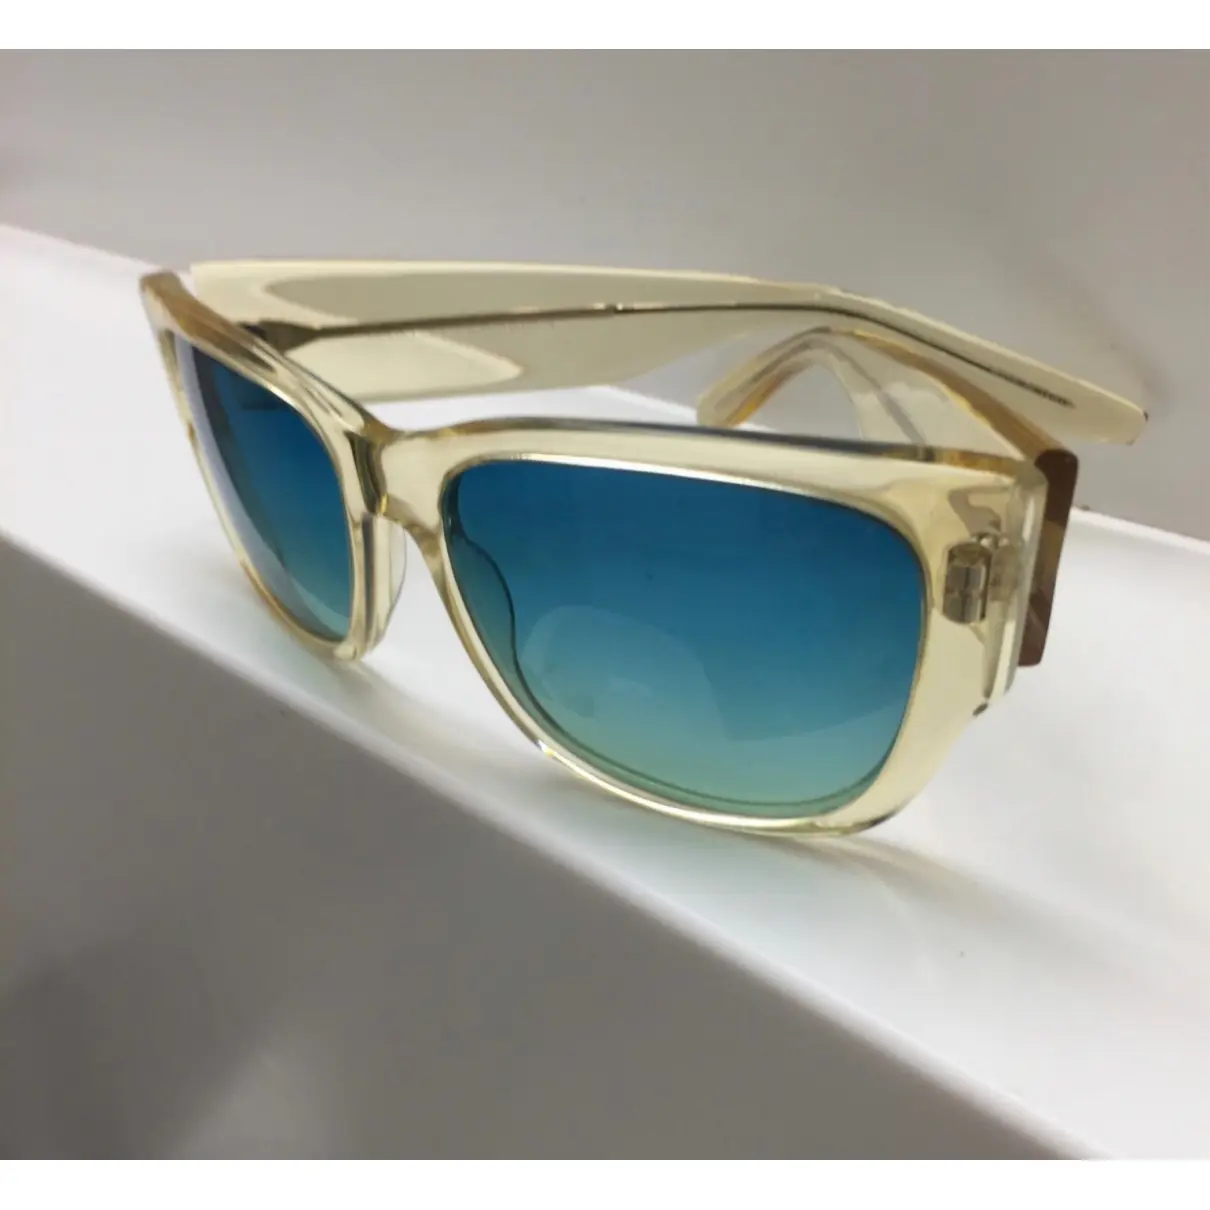 Buy Barton Perreira Sunglasses online